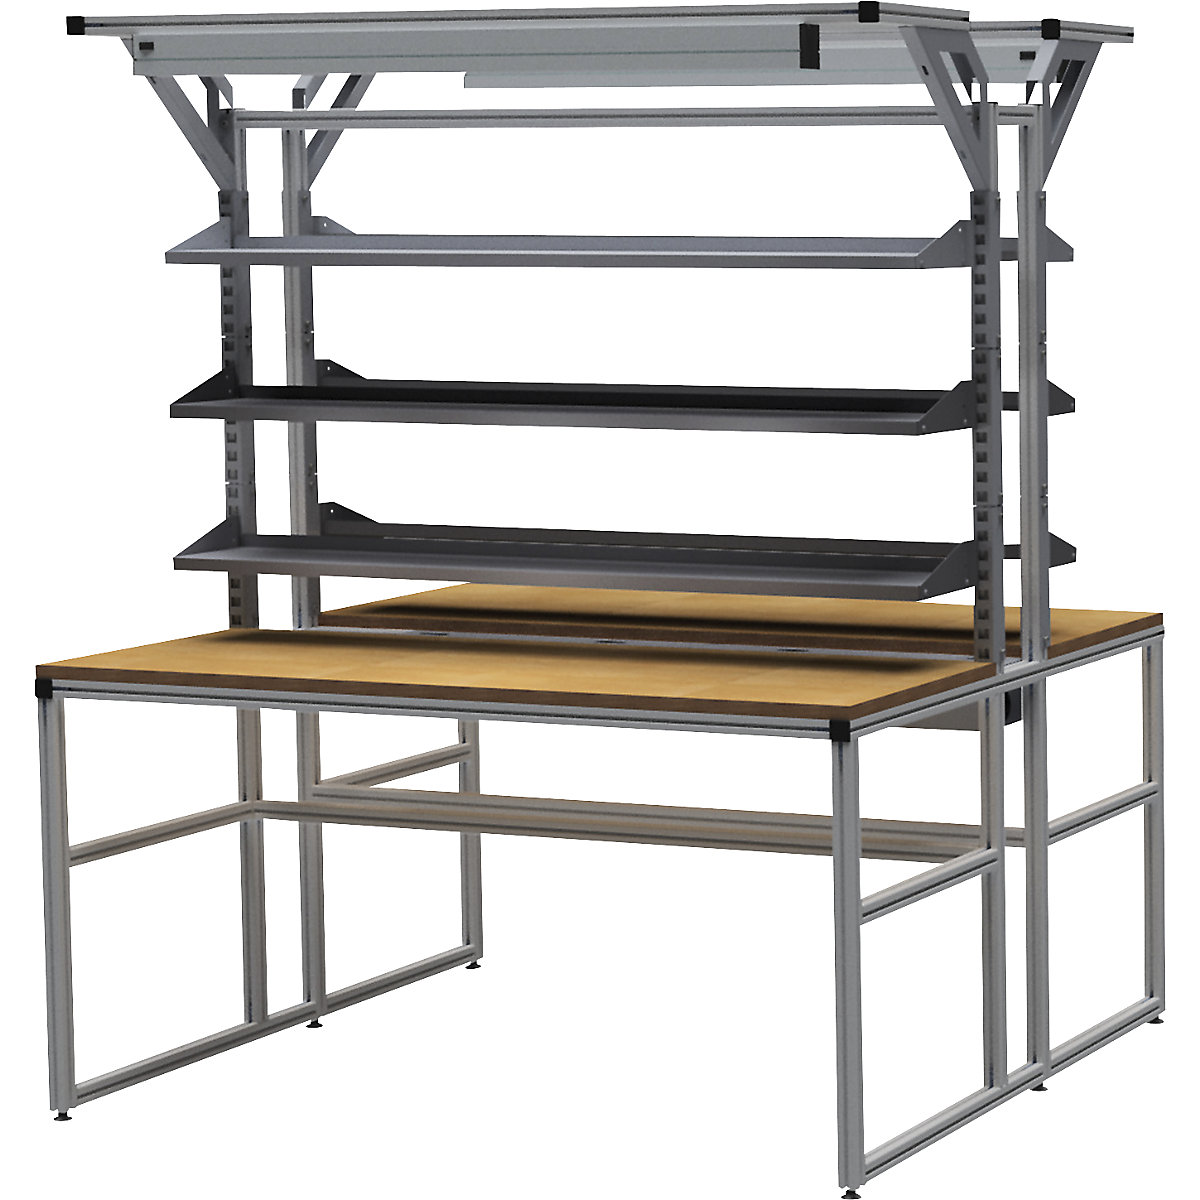 workalu® aluminium workbench with modular system, double sided - bedrunka hirth